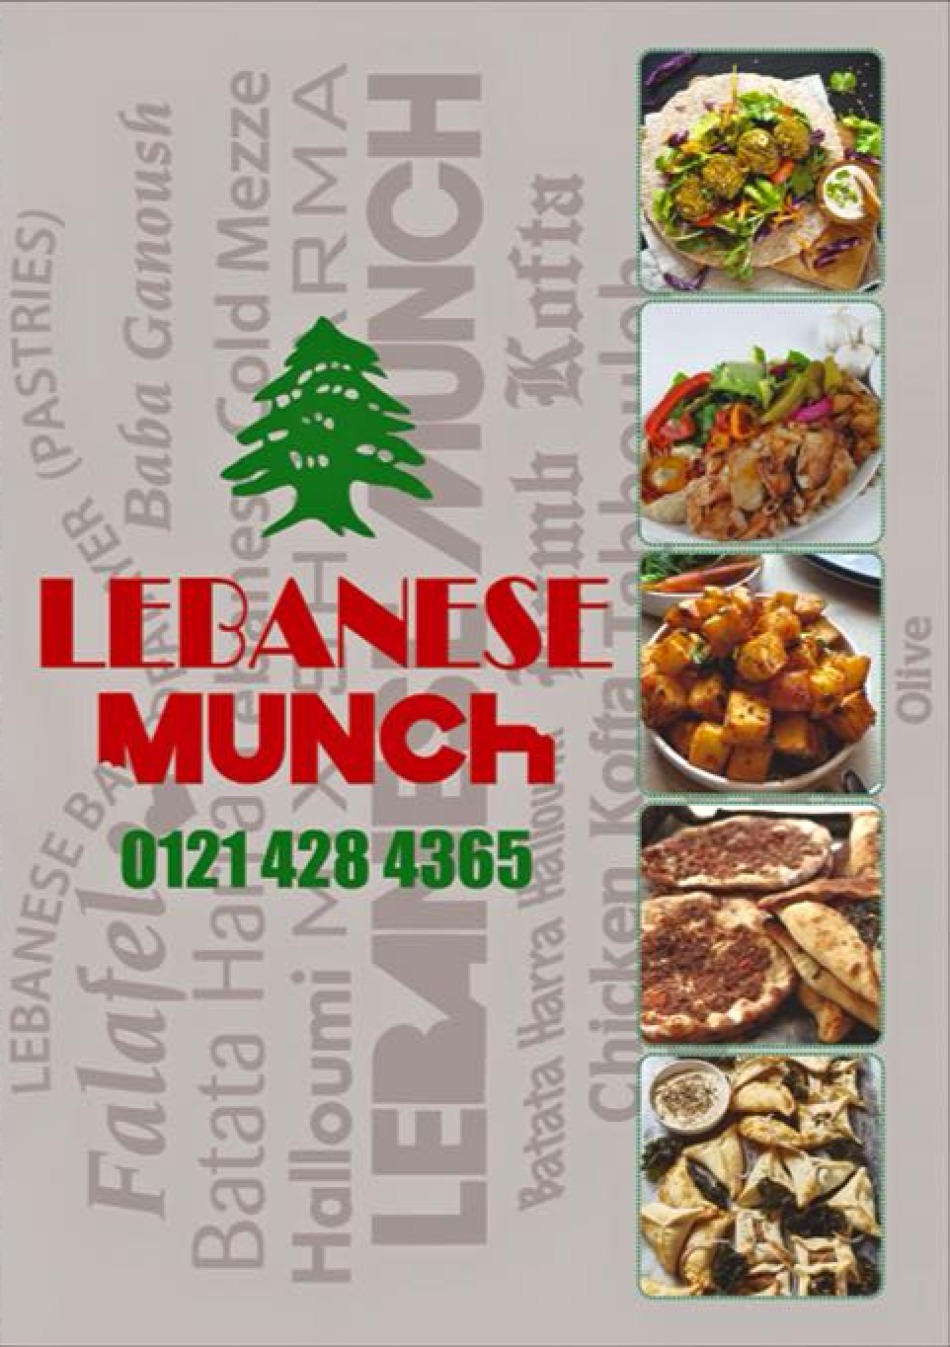 Takeaway Restaurant Menu Page - Lebanese Munch - Birmingham